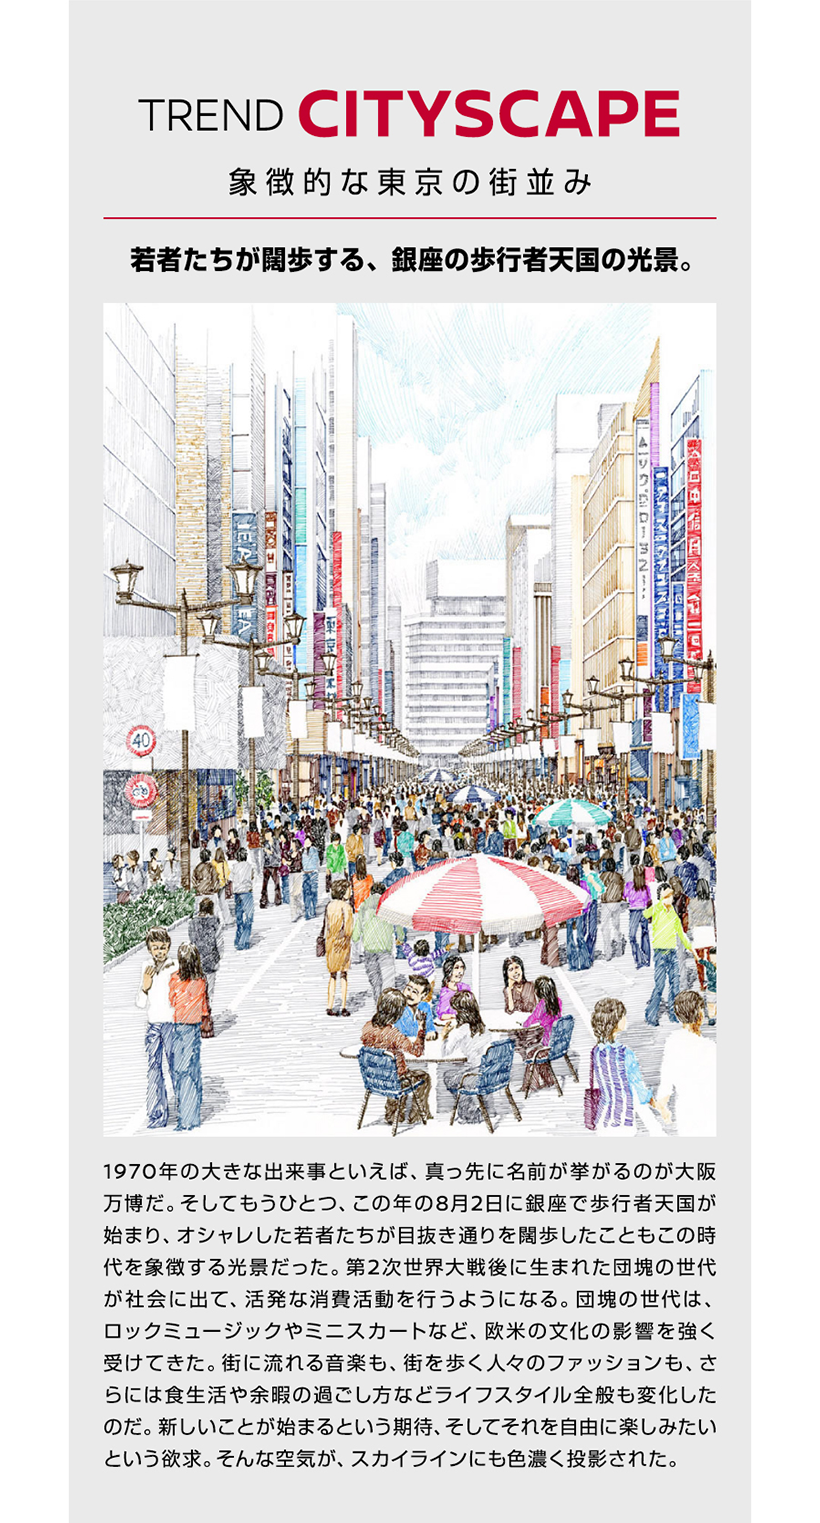 TREND CITYSCAPE 象徴的な東京の街並み 若者たちが闊歩する、銀座の歩行者天国の光景。